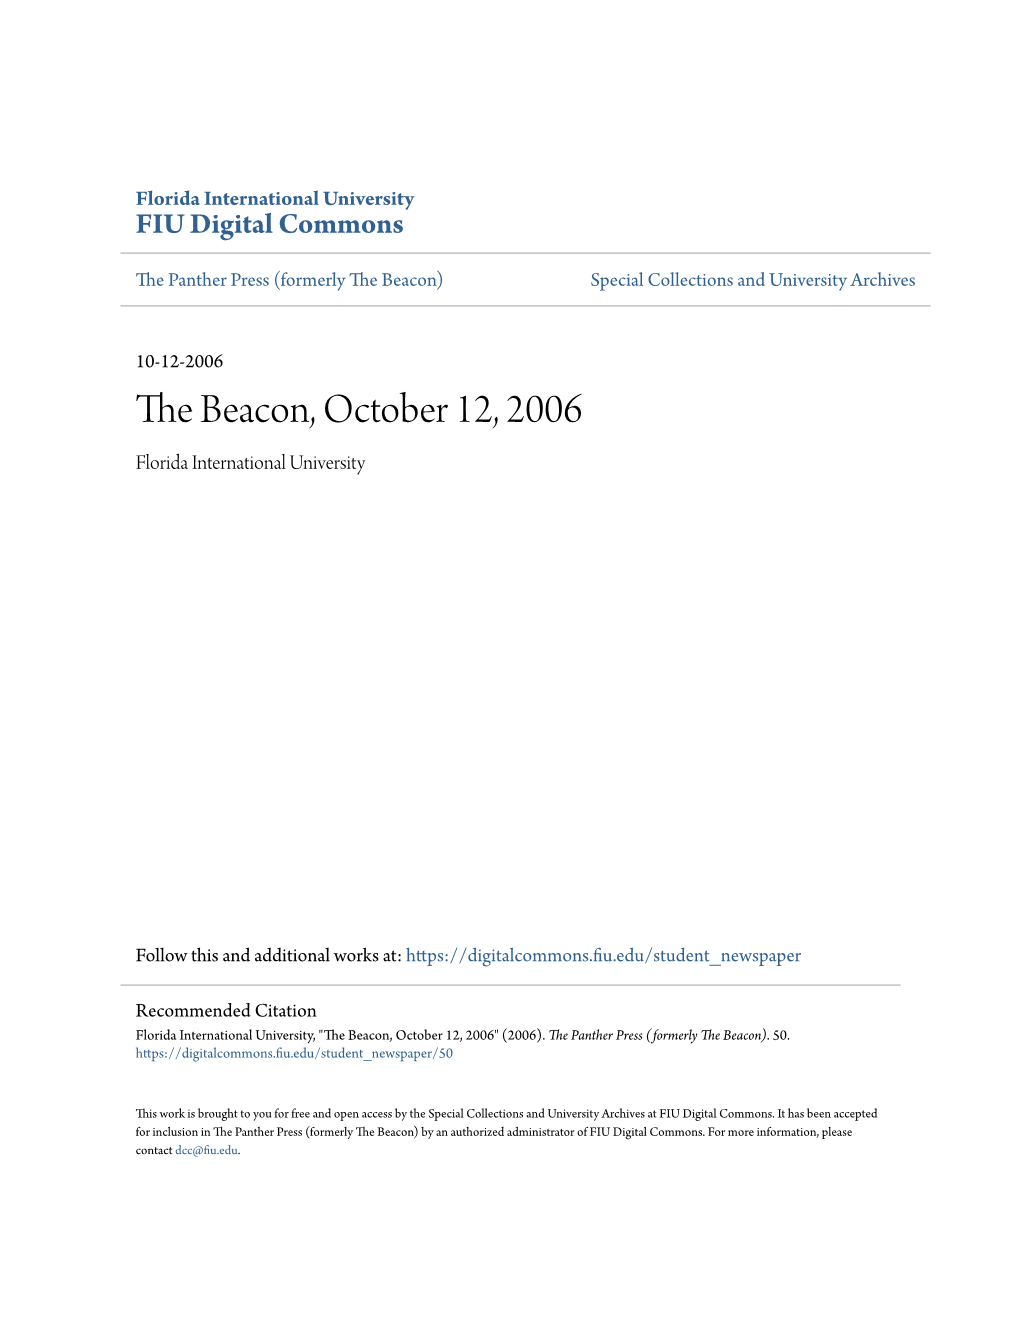 The Beacon, October 12, 2006 Florida International University